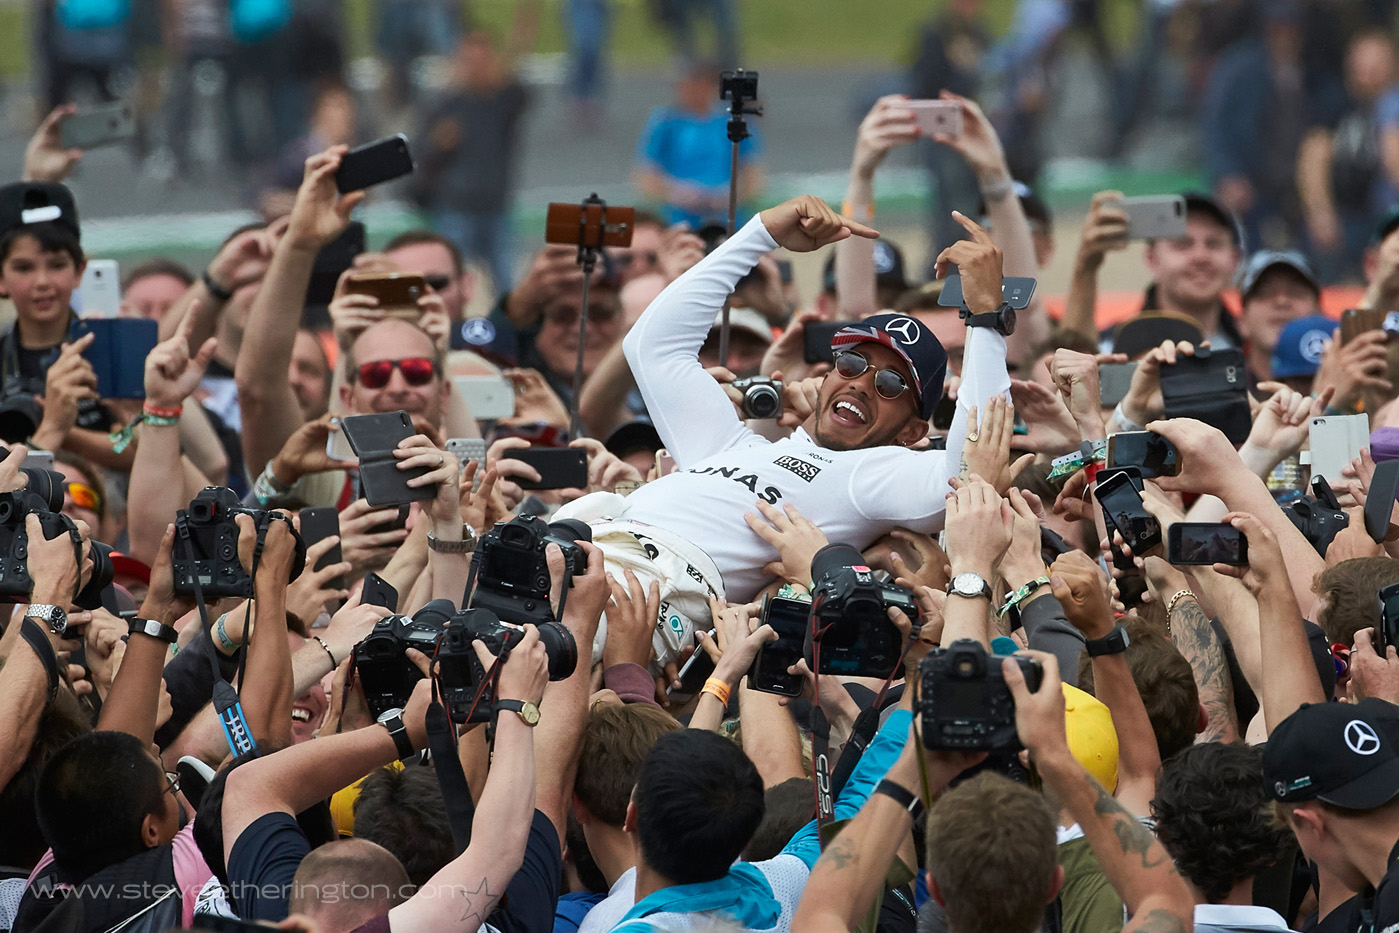 Lewis Hamilton surfs photography frenzy